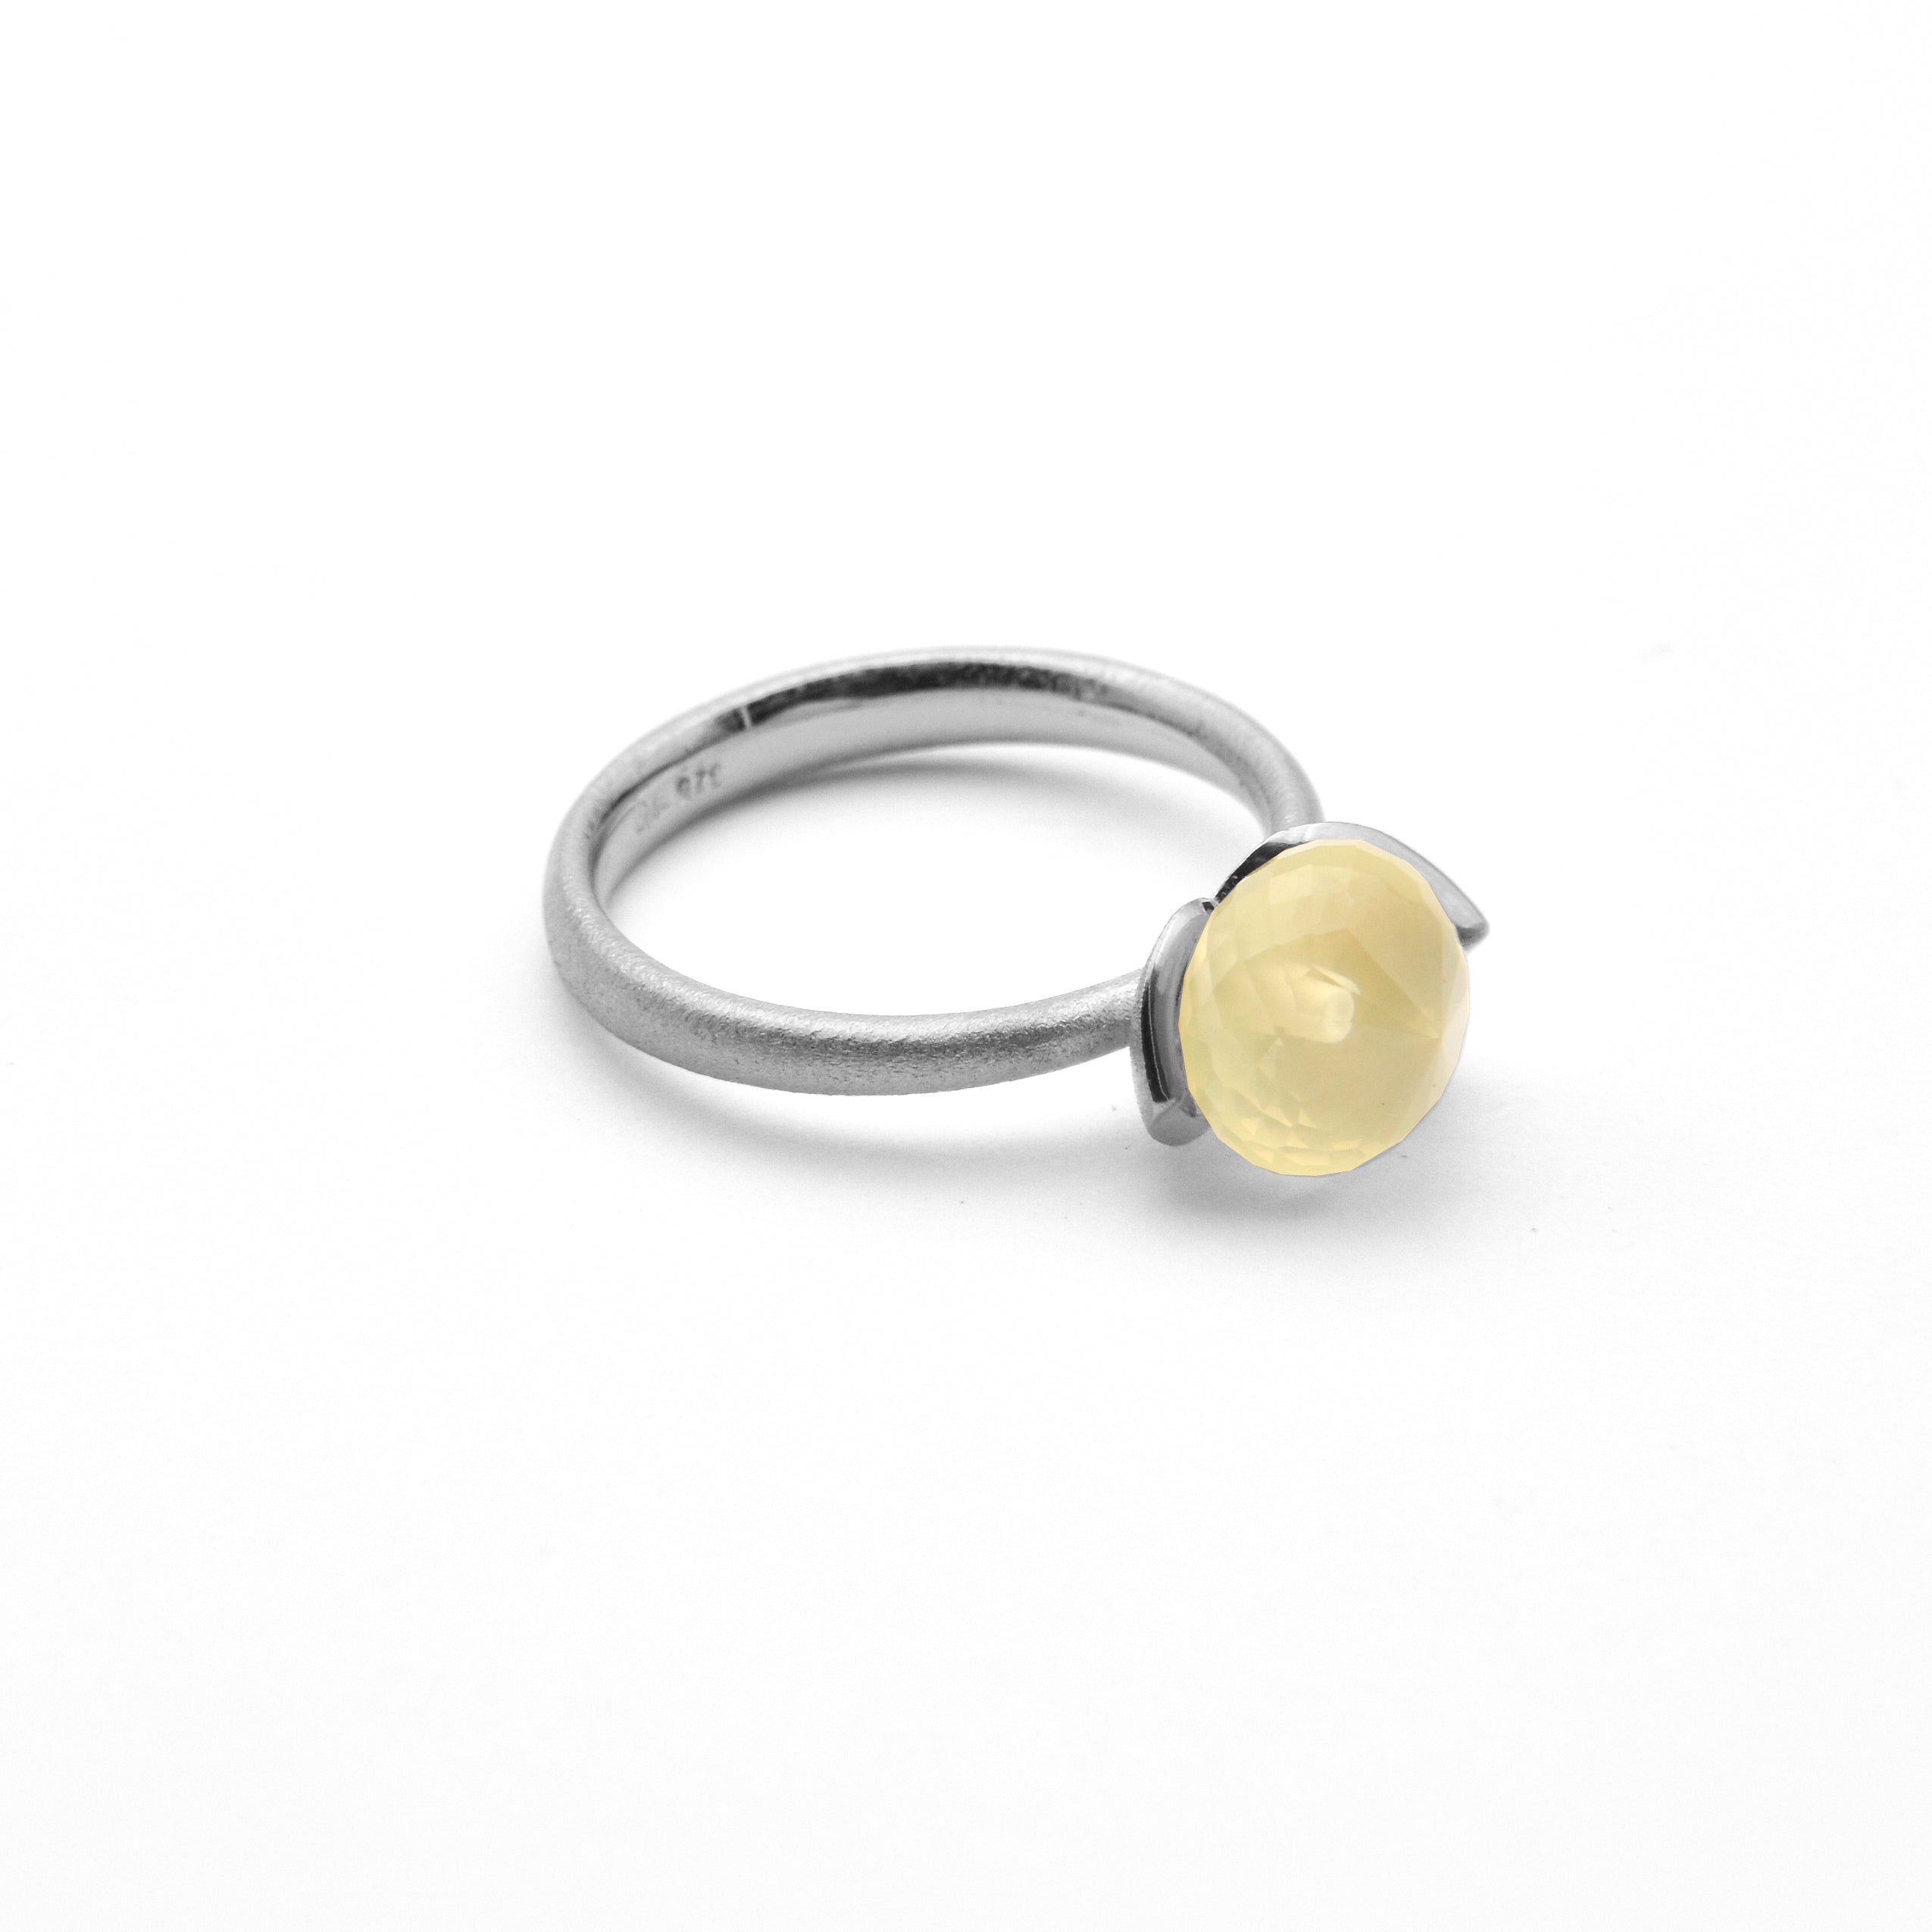 Dolce ring "smal" with lemon quartz 925/-